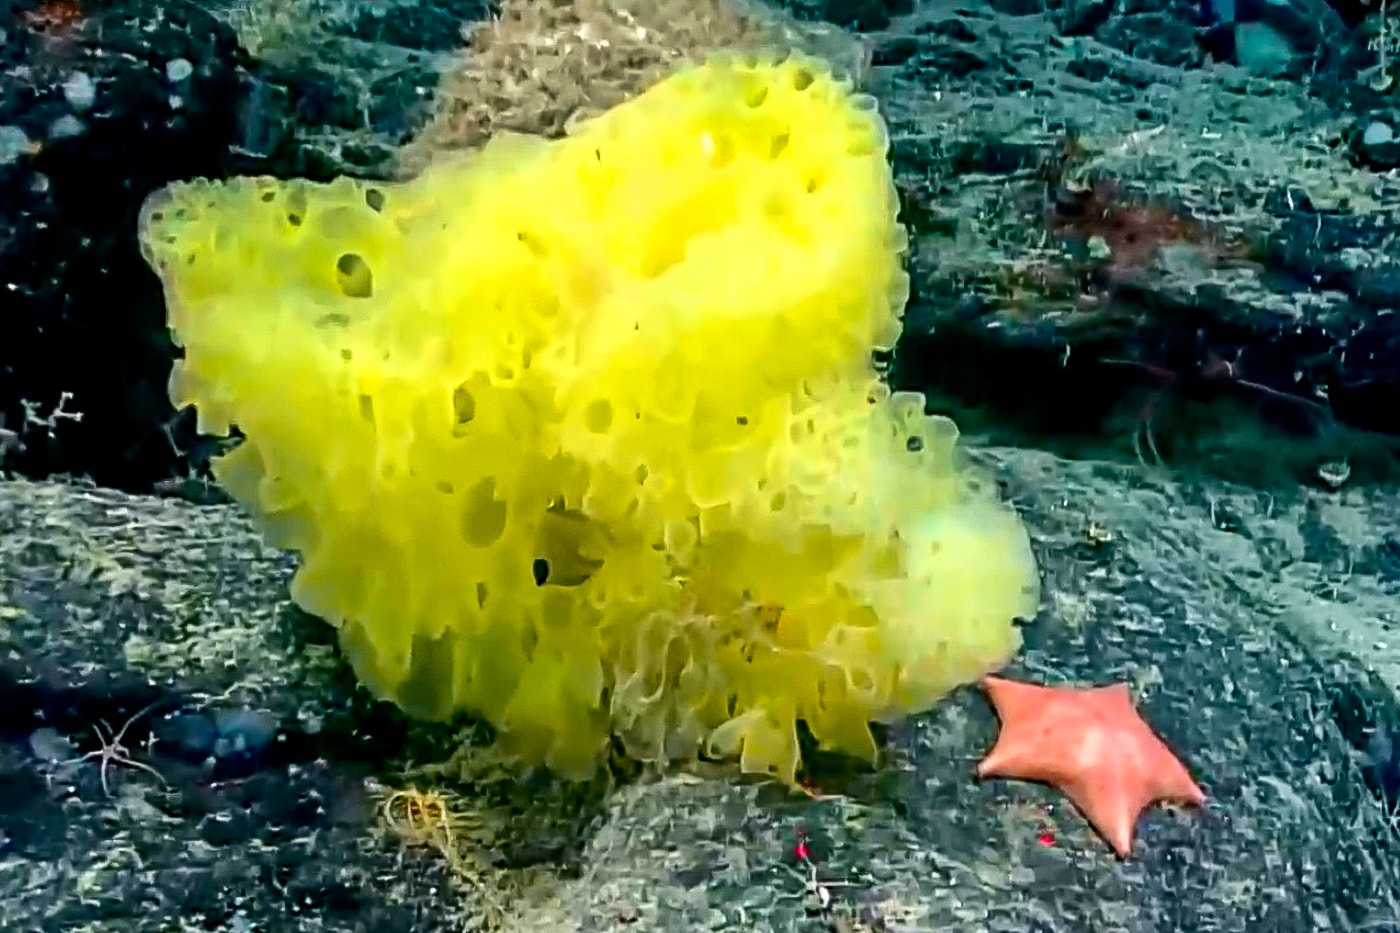 Real Life SpongeBob Patrick Star Atlantic Ocean Photo Info